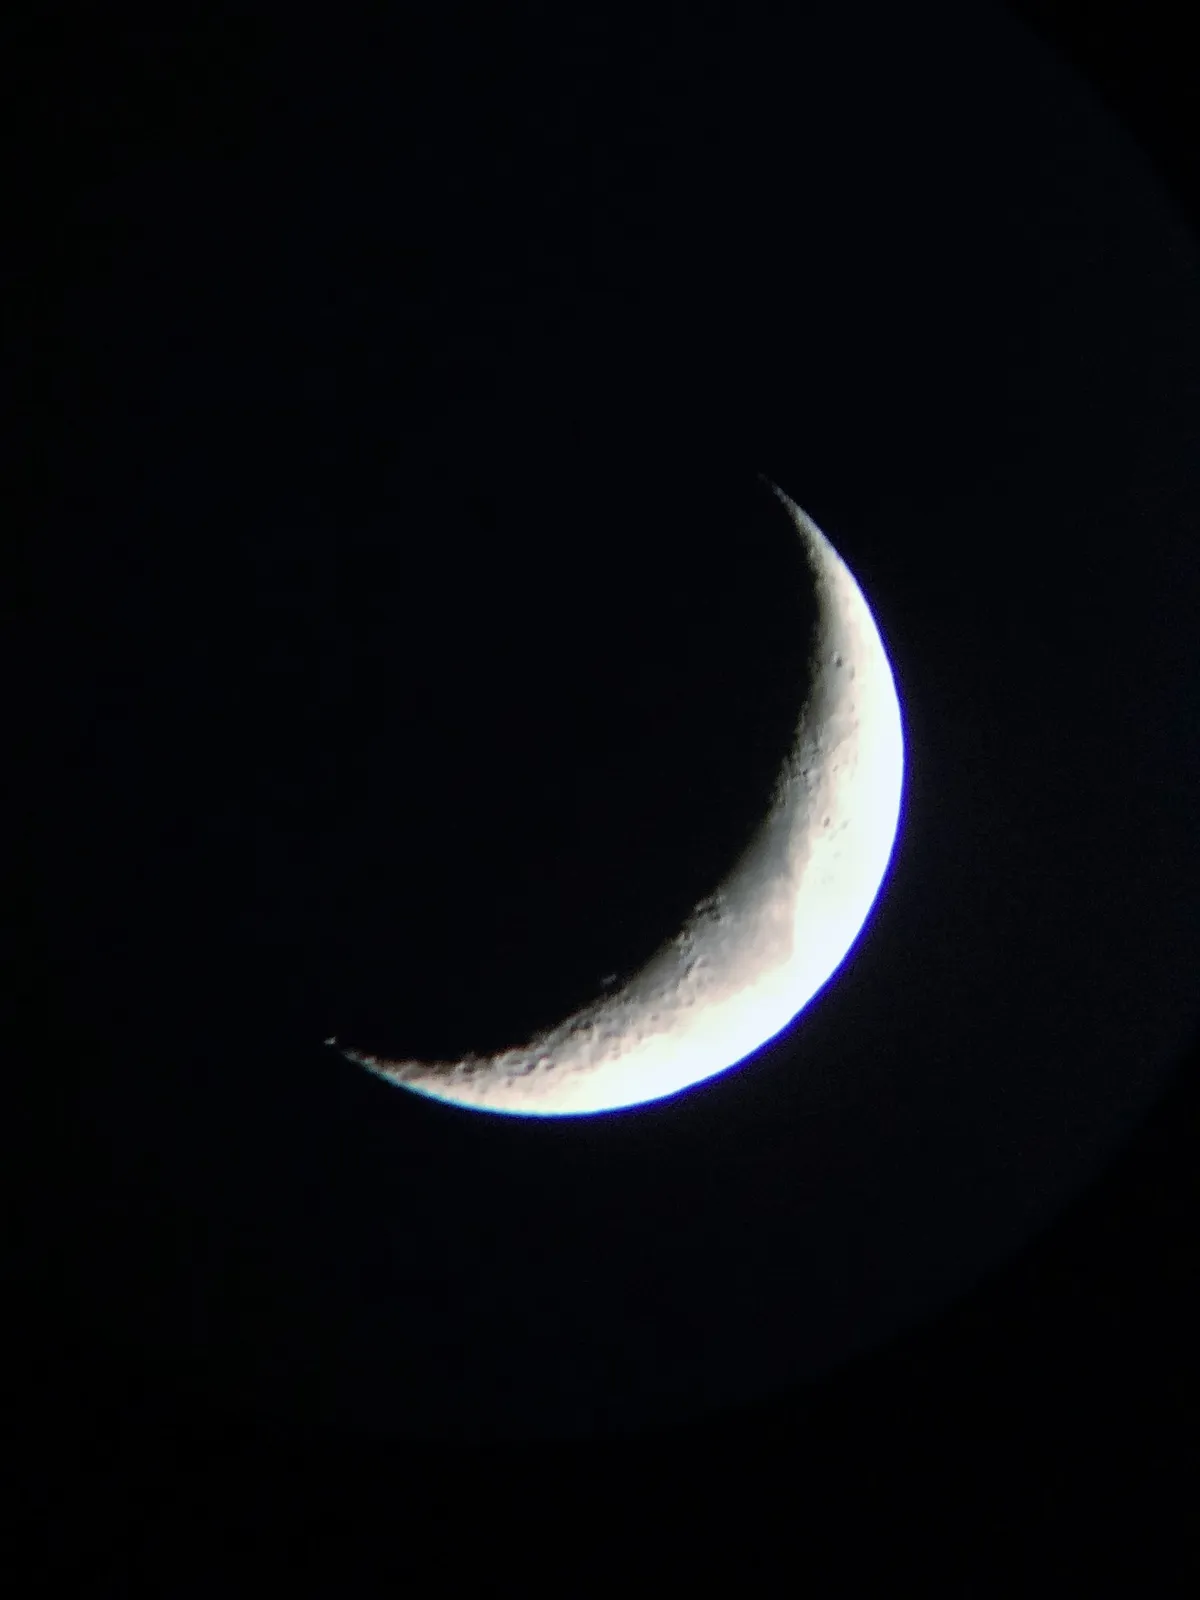 Winter Crescent Moon by Martin Davies, Bridport, Dorset. Equipment: Celestron Travel Scope 70, iPhone 5s.